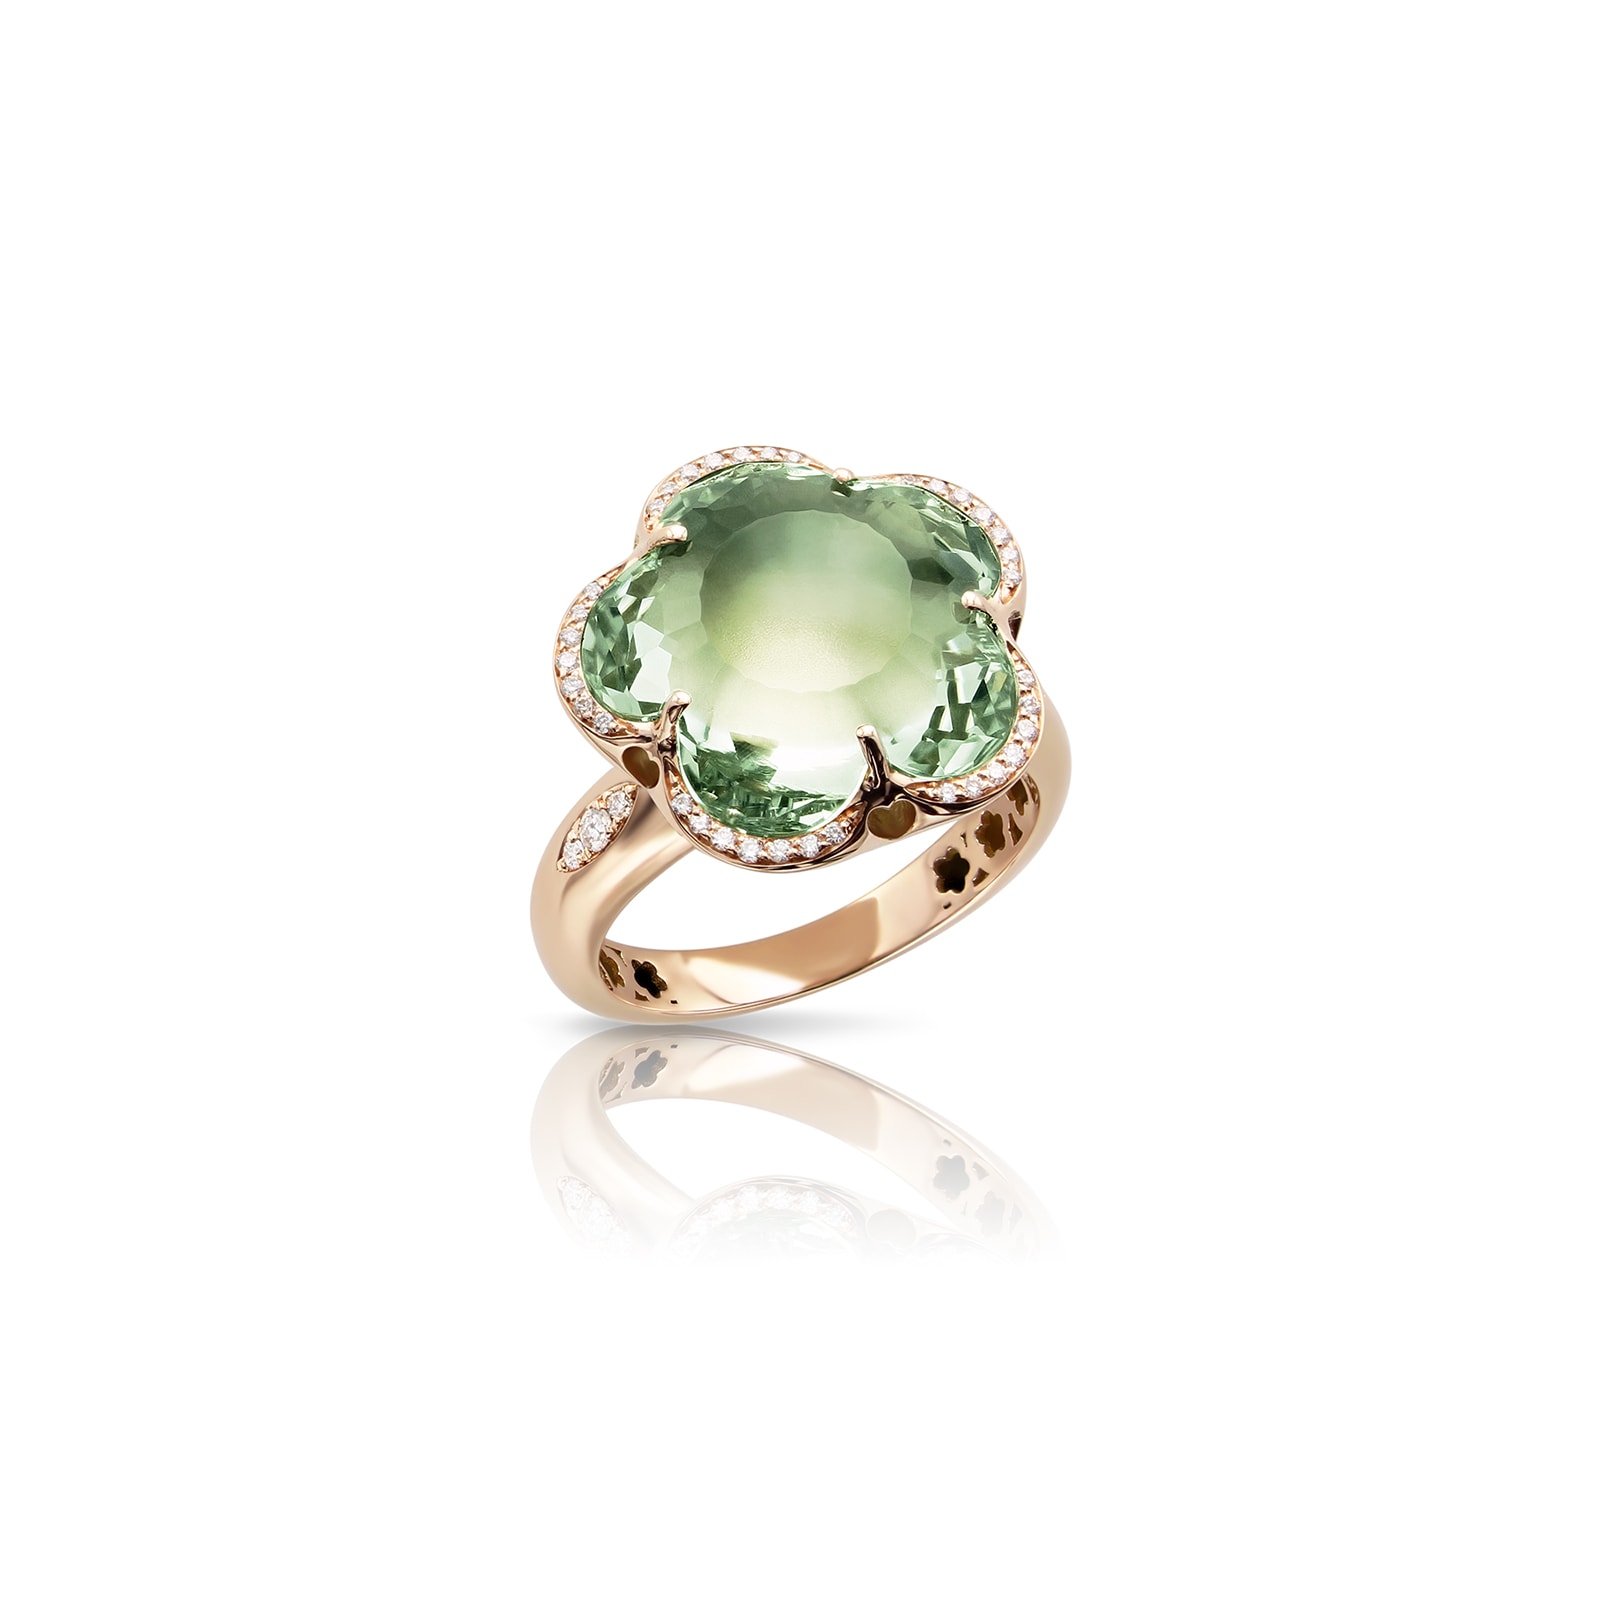 Bon Ton Dolce Vita Ring in 18ct Rose Gold with Prasiolite and Diamonds - Ring Size L